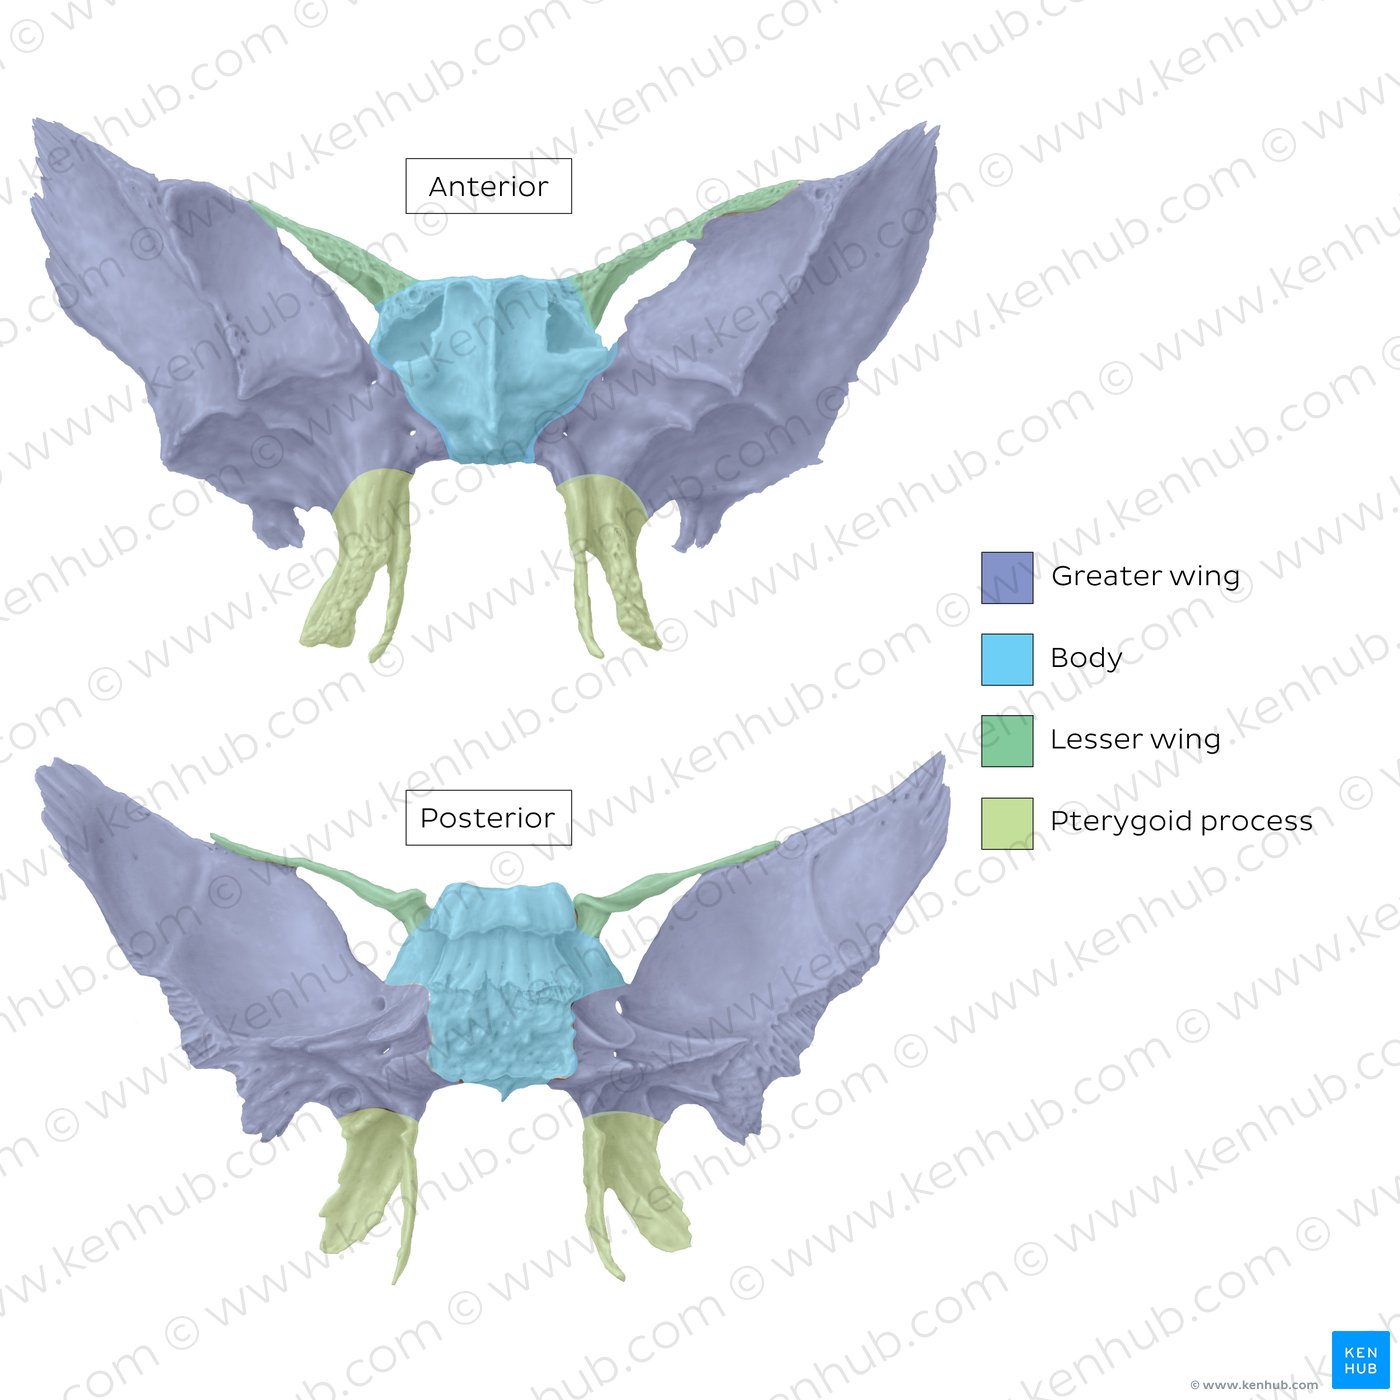 Parts of the sphenoid bone